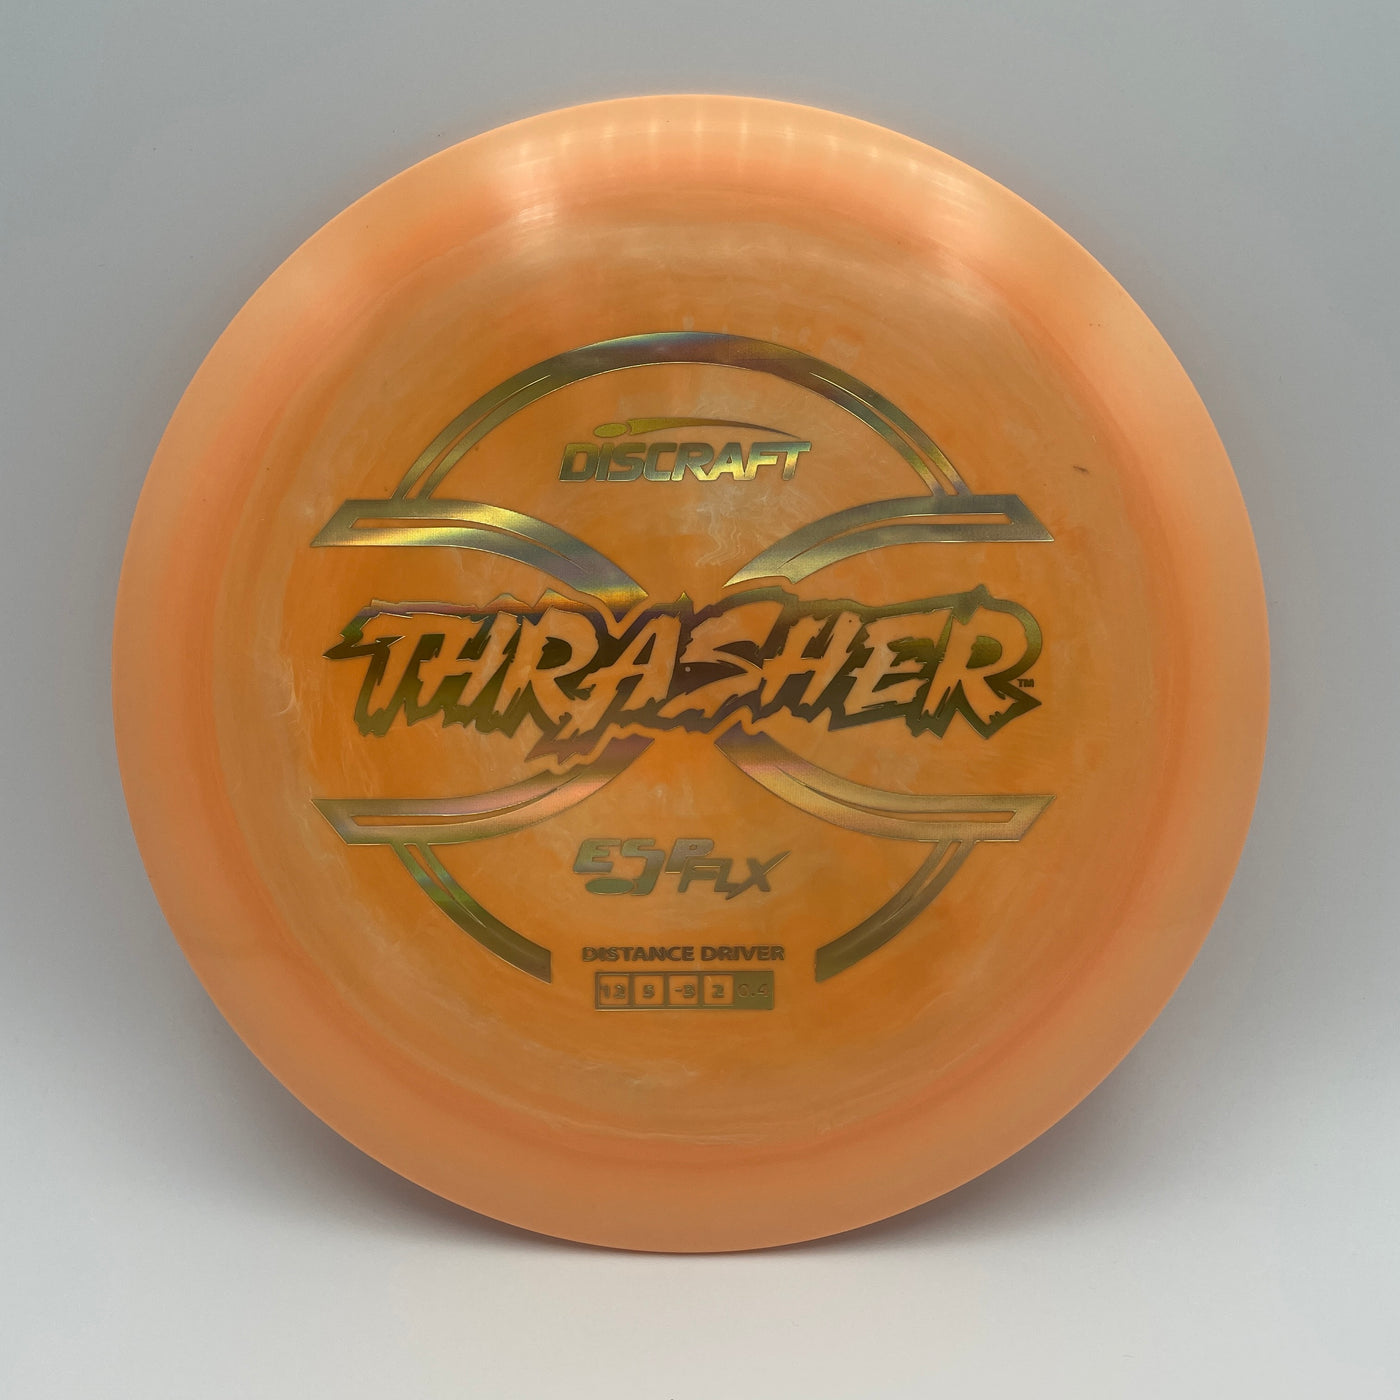 ESP FLX Thrasher